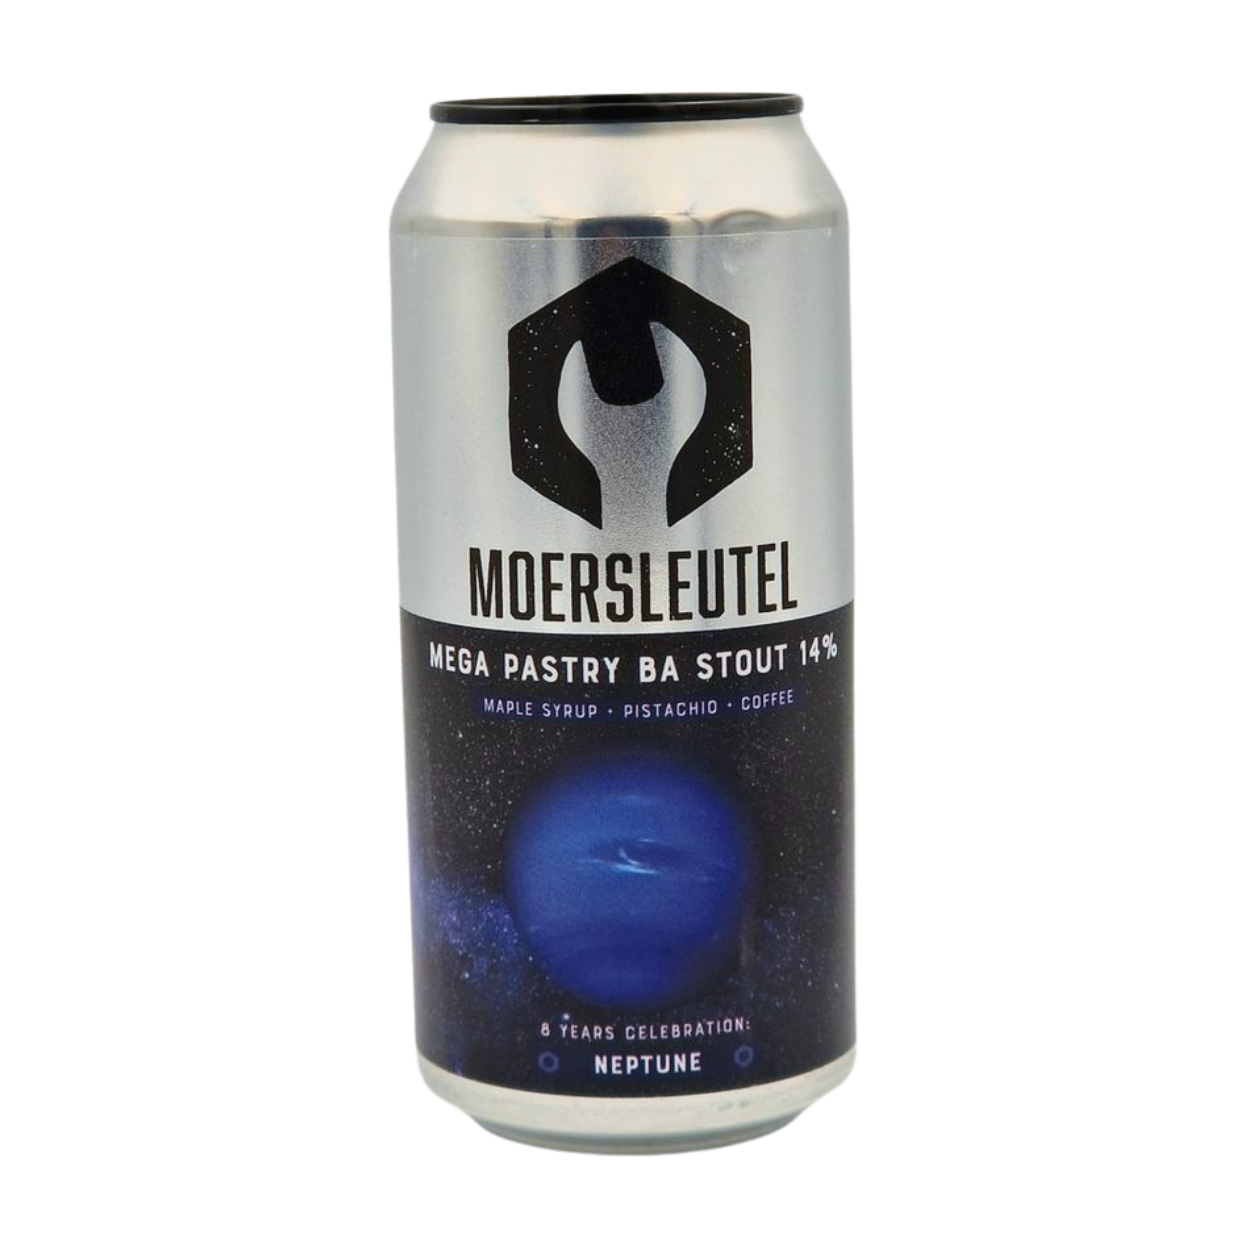 Moersleutel 8 Years Anniversary set Neptune Stout Beer